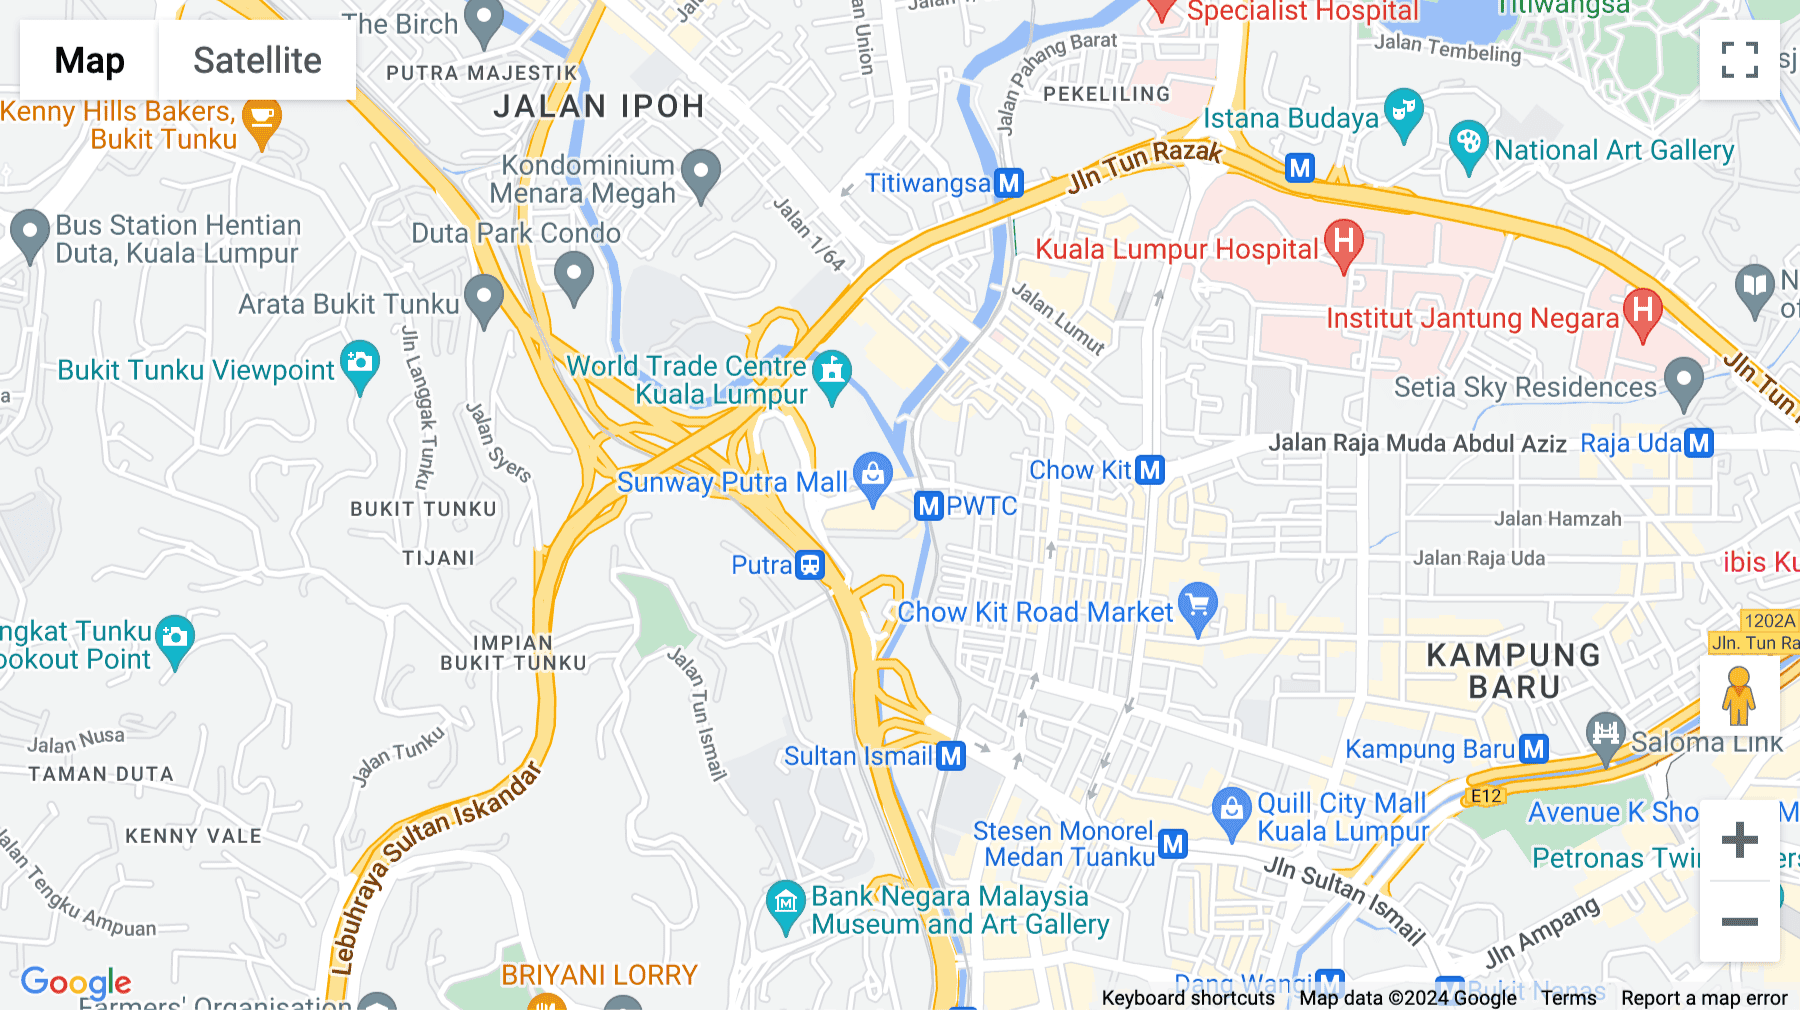 Click for interative map of Sunway Putra Mall, 100, Jalan Putra, Level 4, Kuala Lumpur